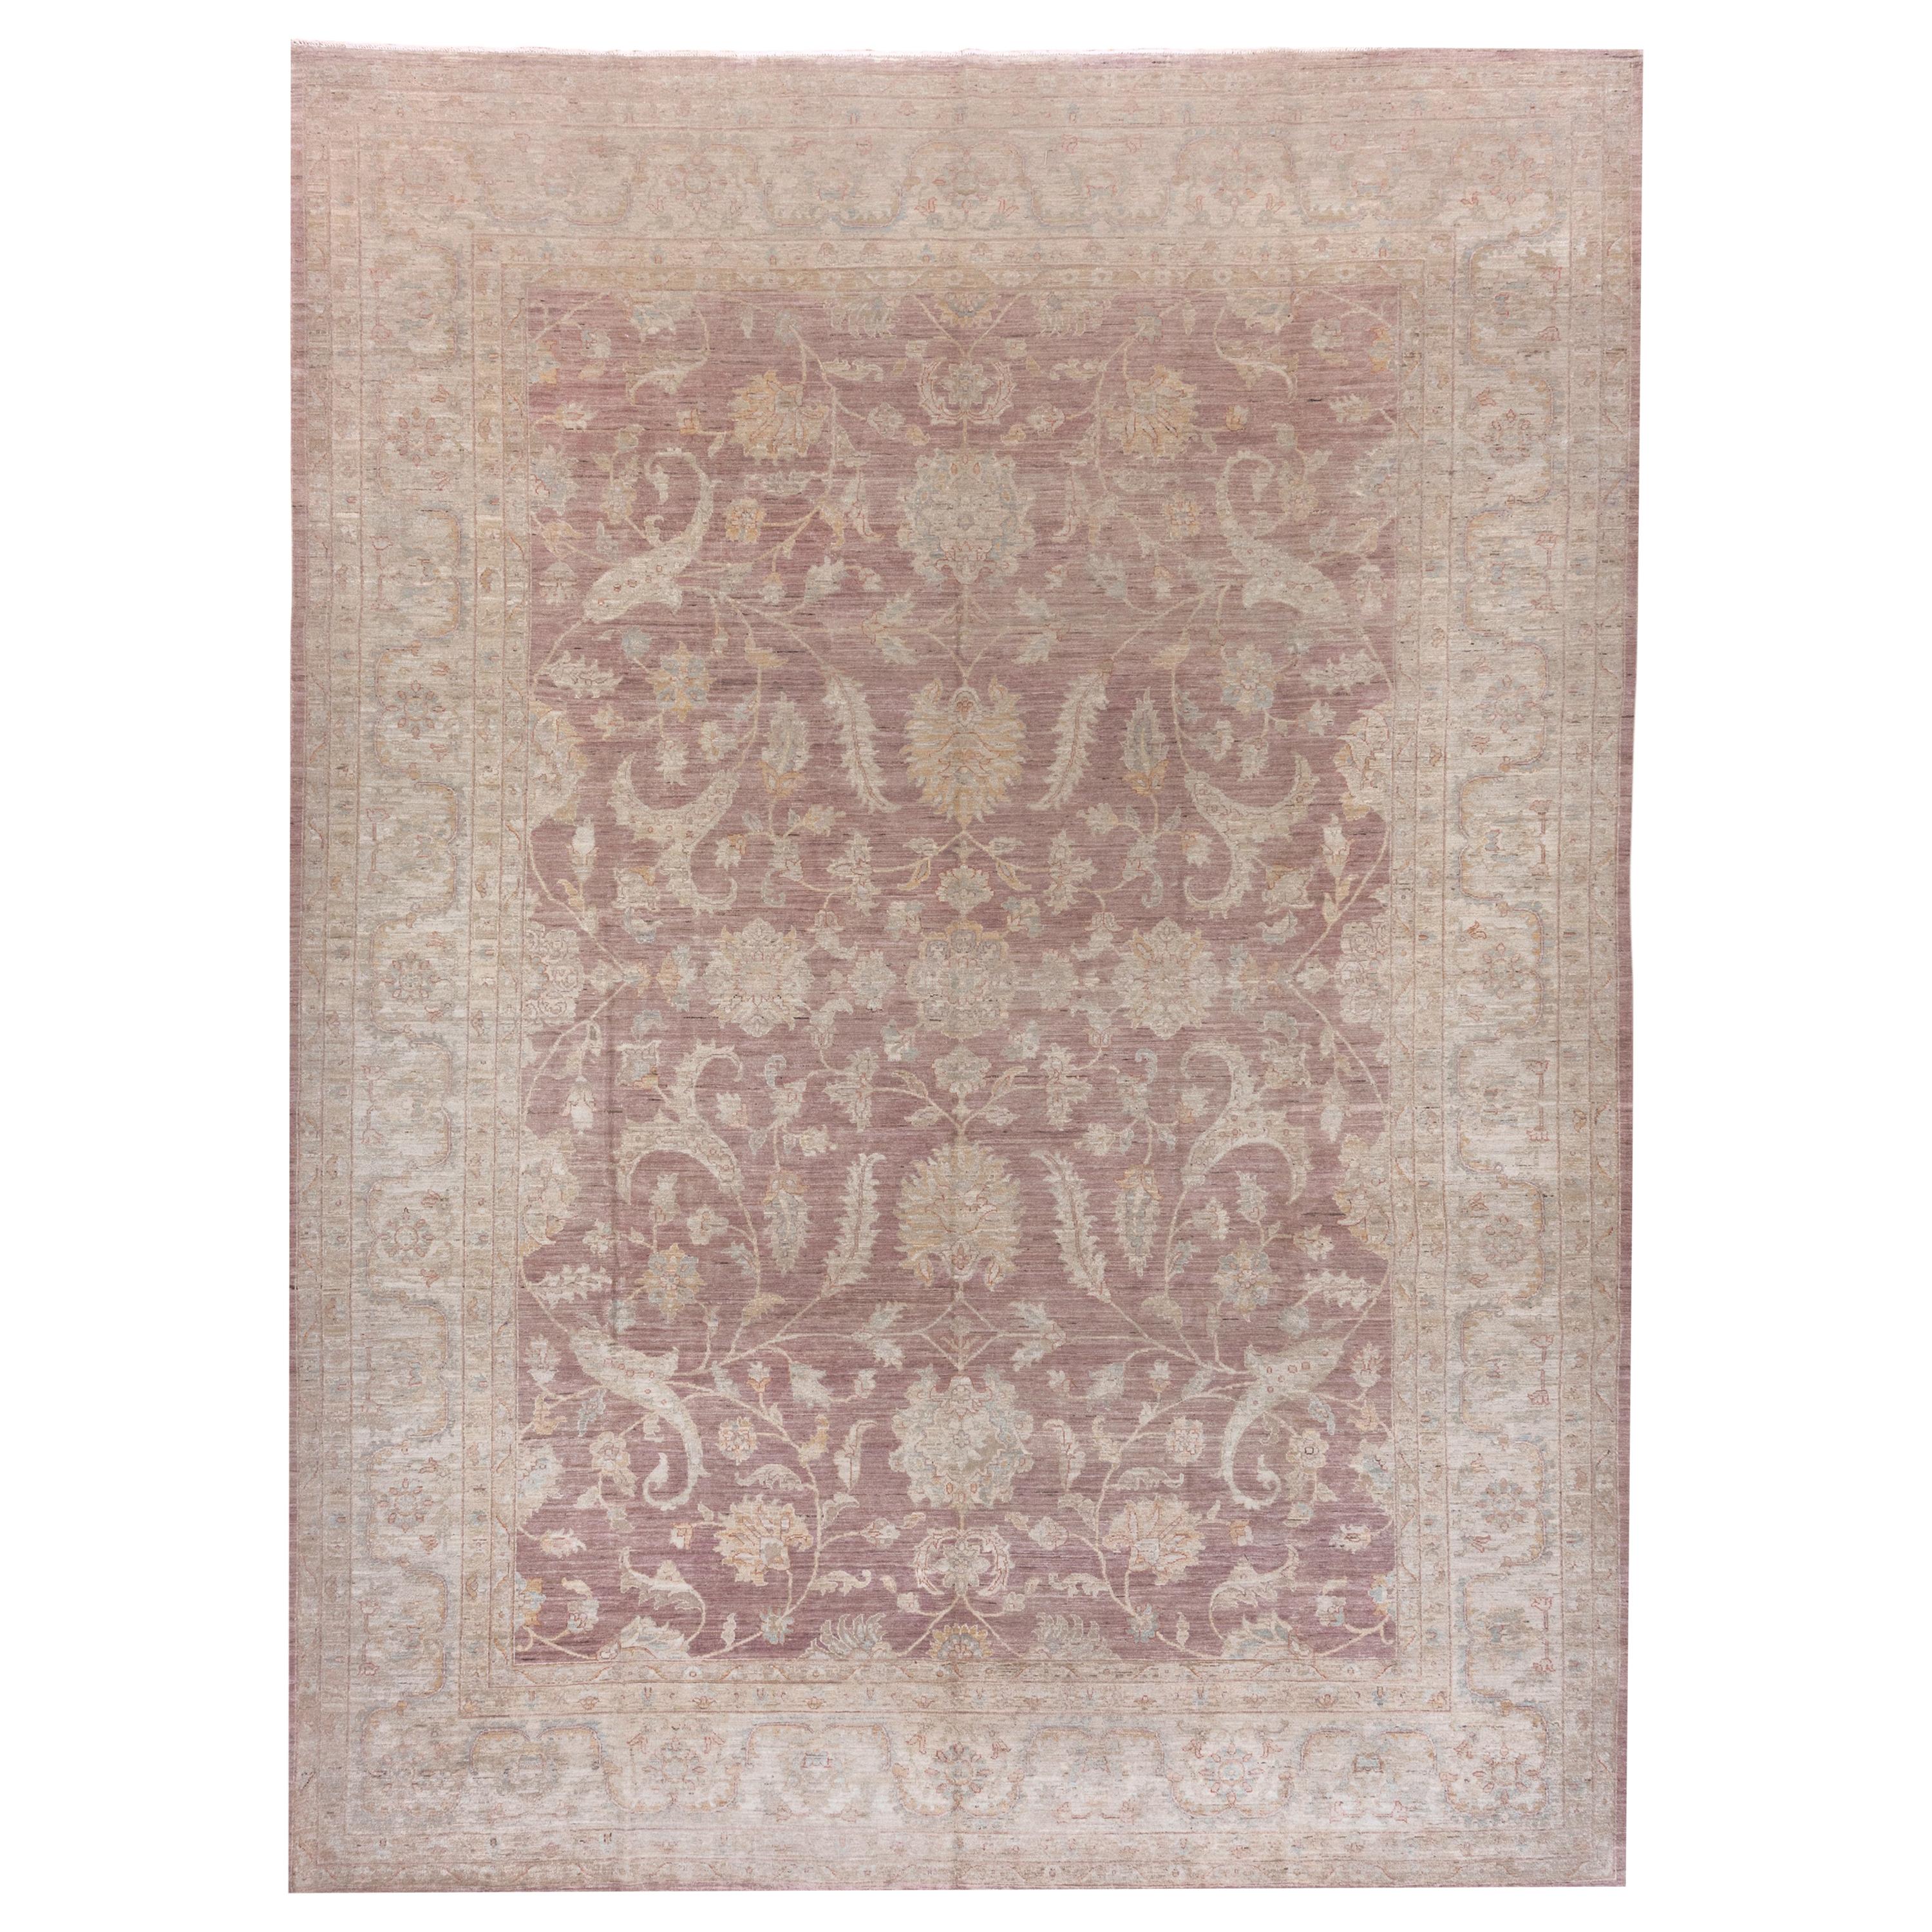 Super Fine Weave Afghan Carpet, Light Burgundy Field